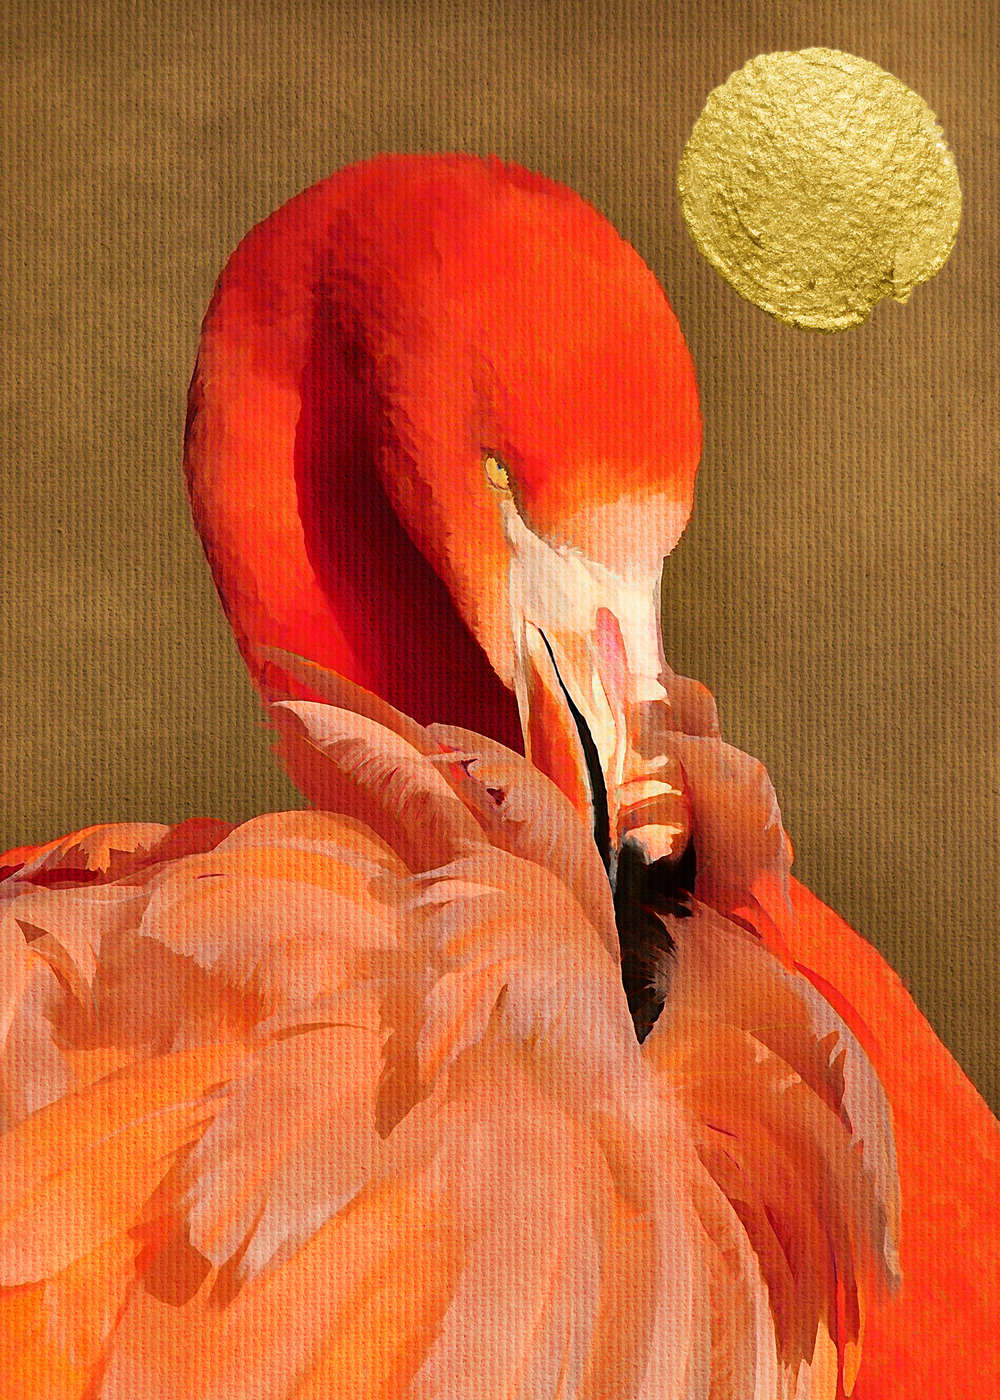             Flamingo Fototapete Gemälde Stil mit Gold Sonne
        